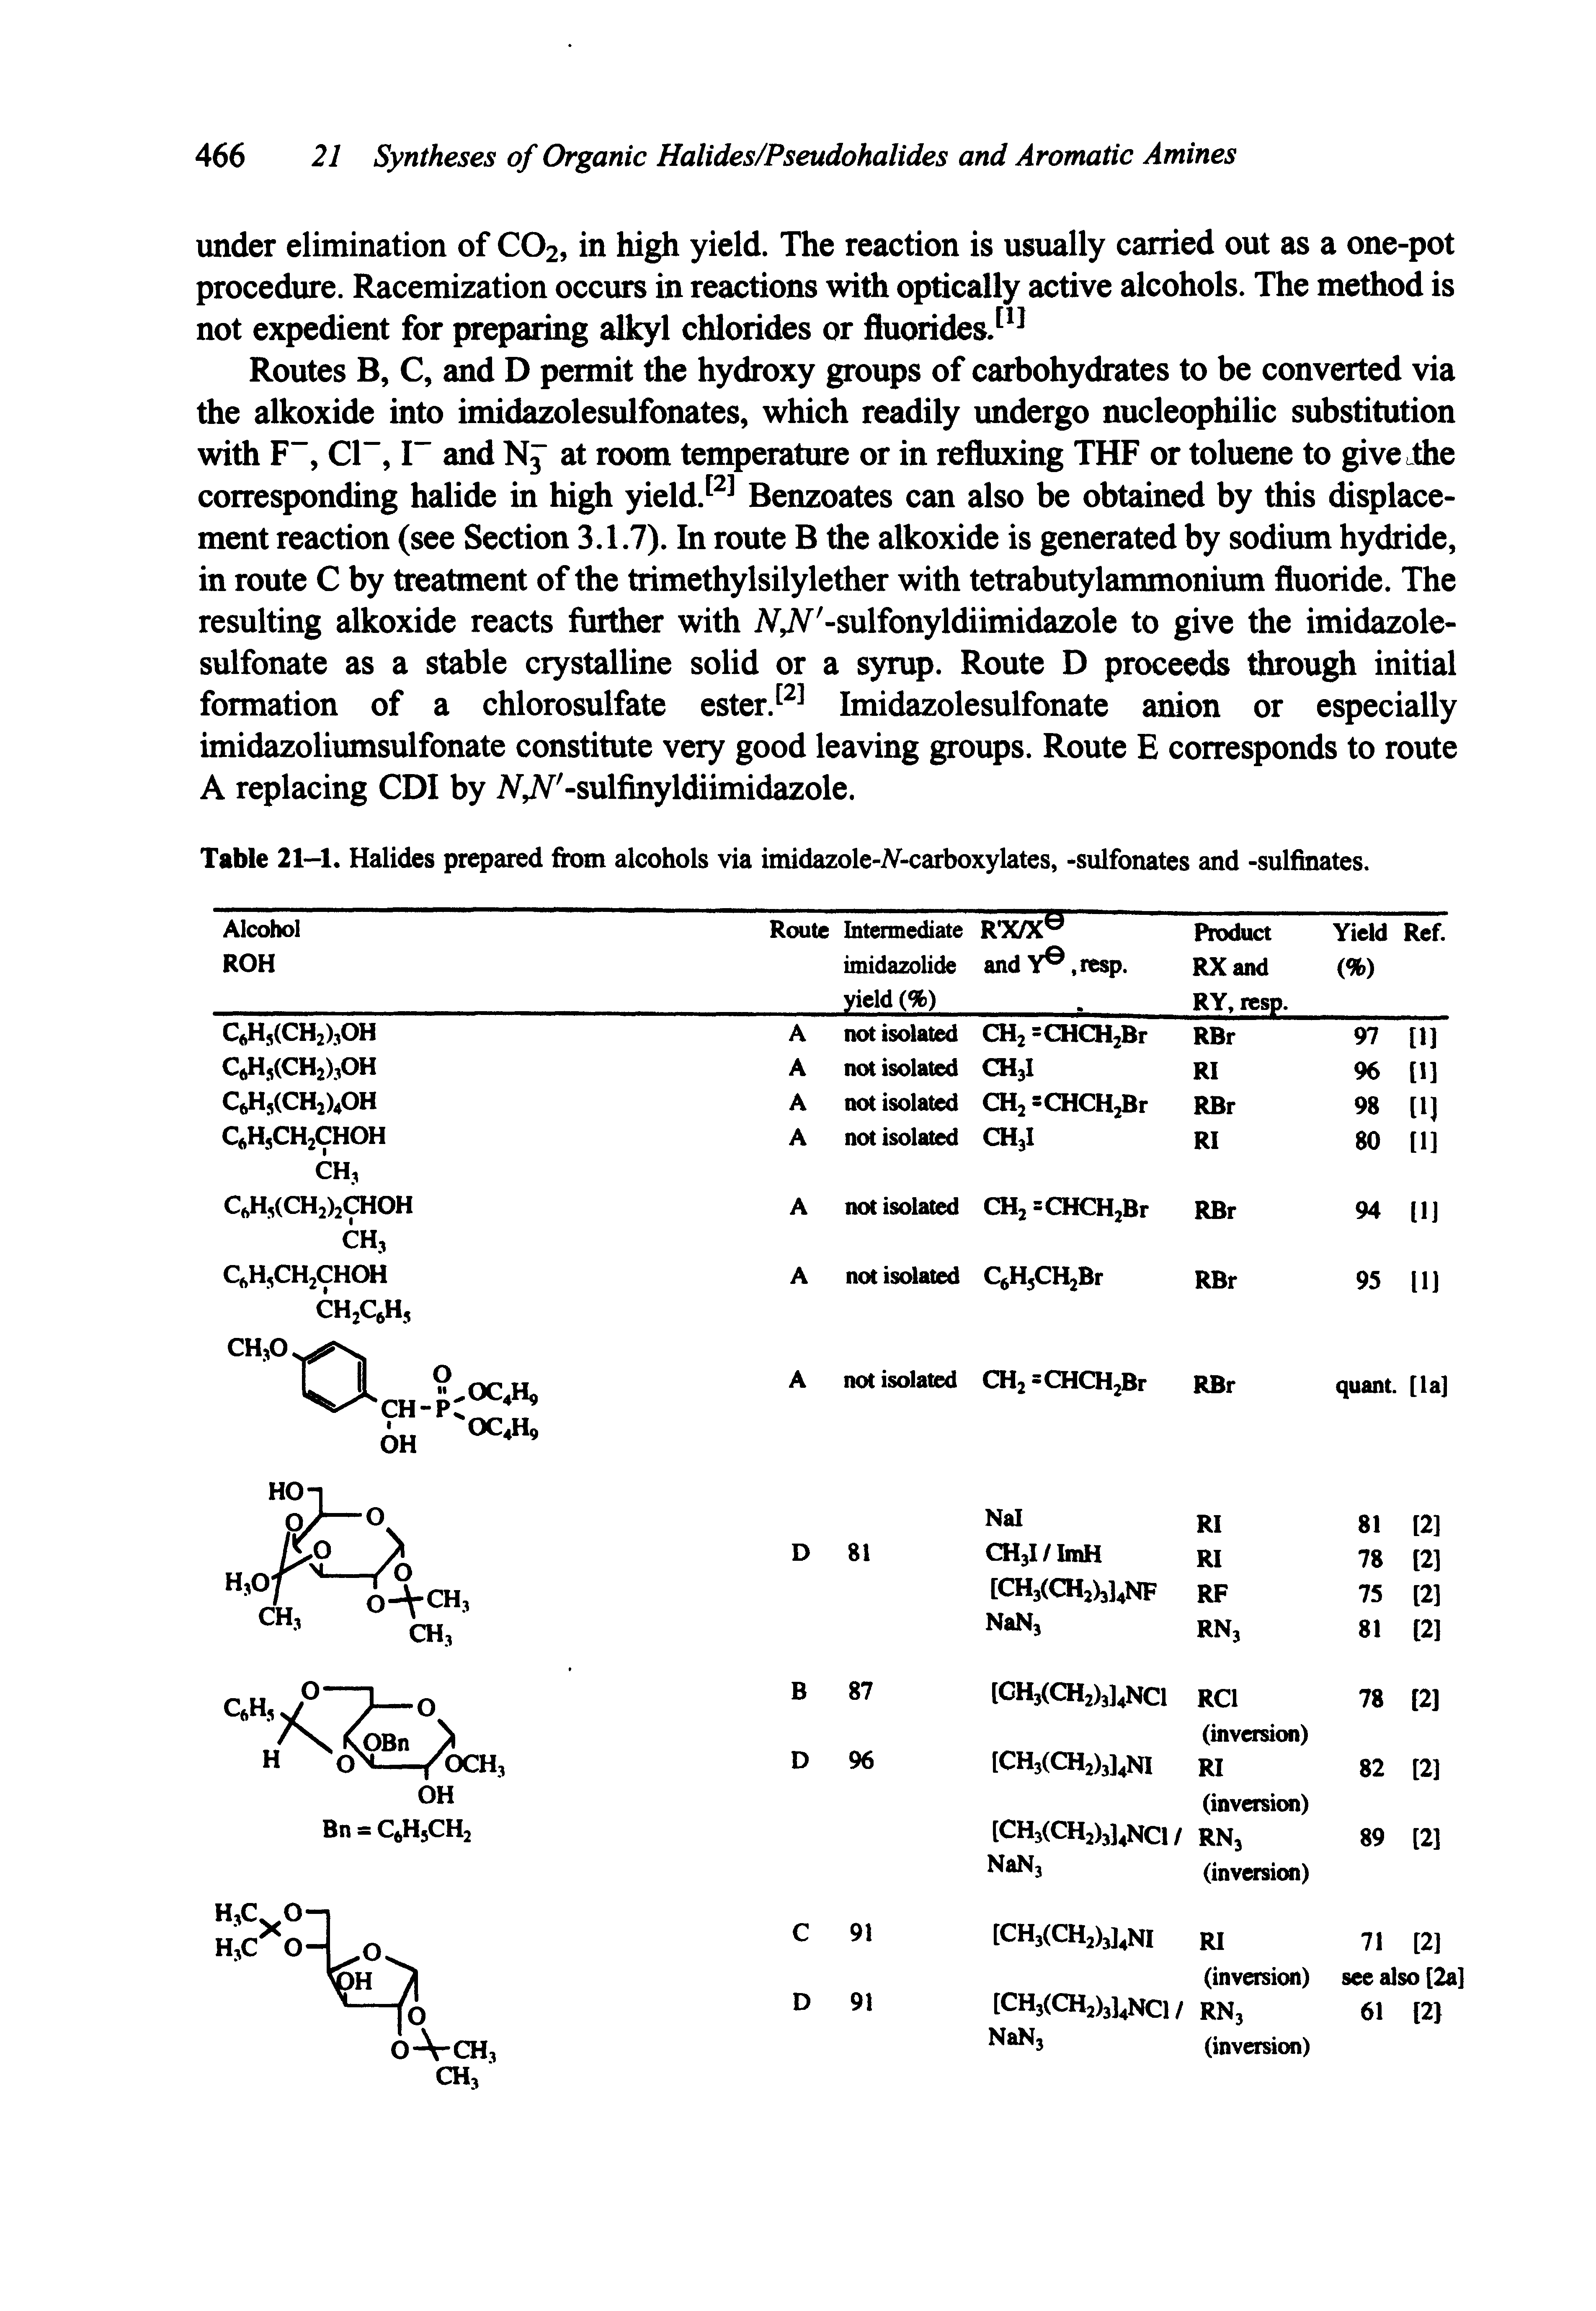 Table 21-1. Halides prepared from alcohols via imidazole-V-carboxylates, -sulfonates and -sulfinates.